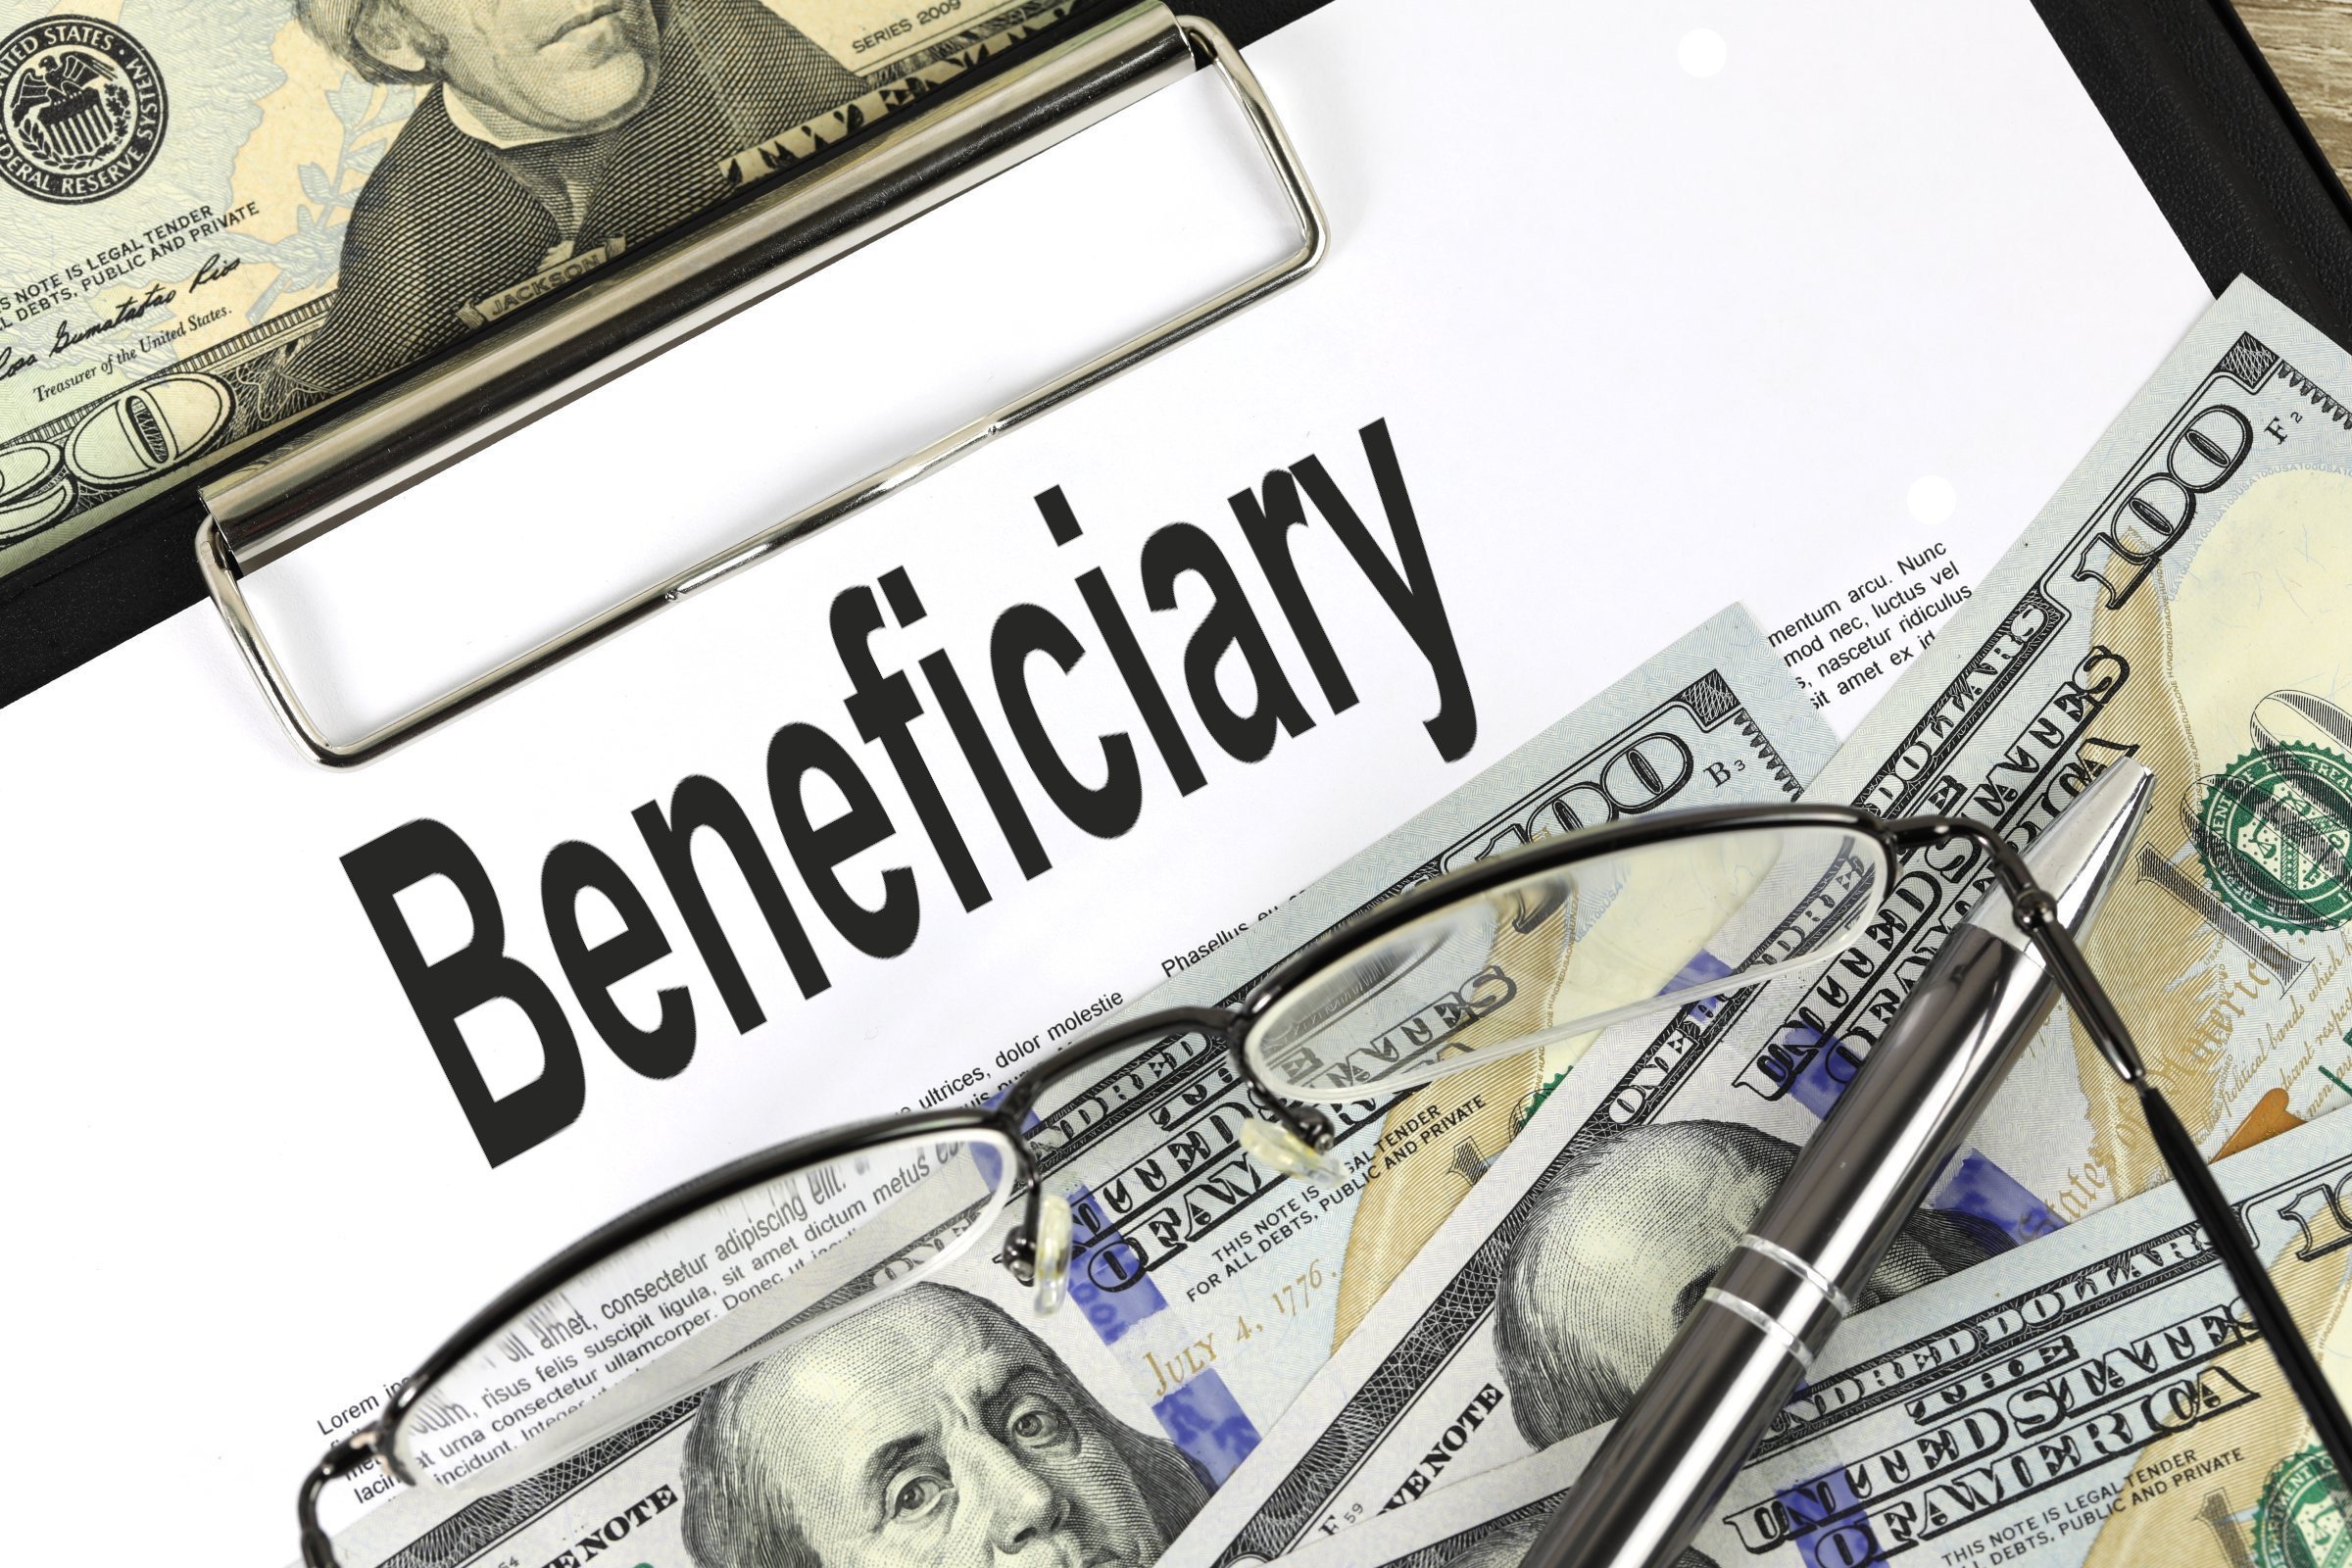 beneficiary